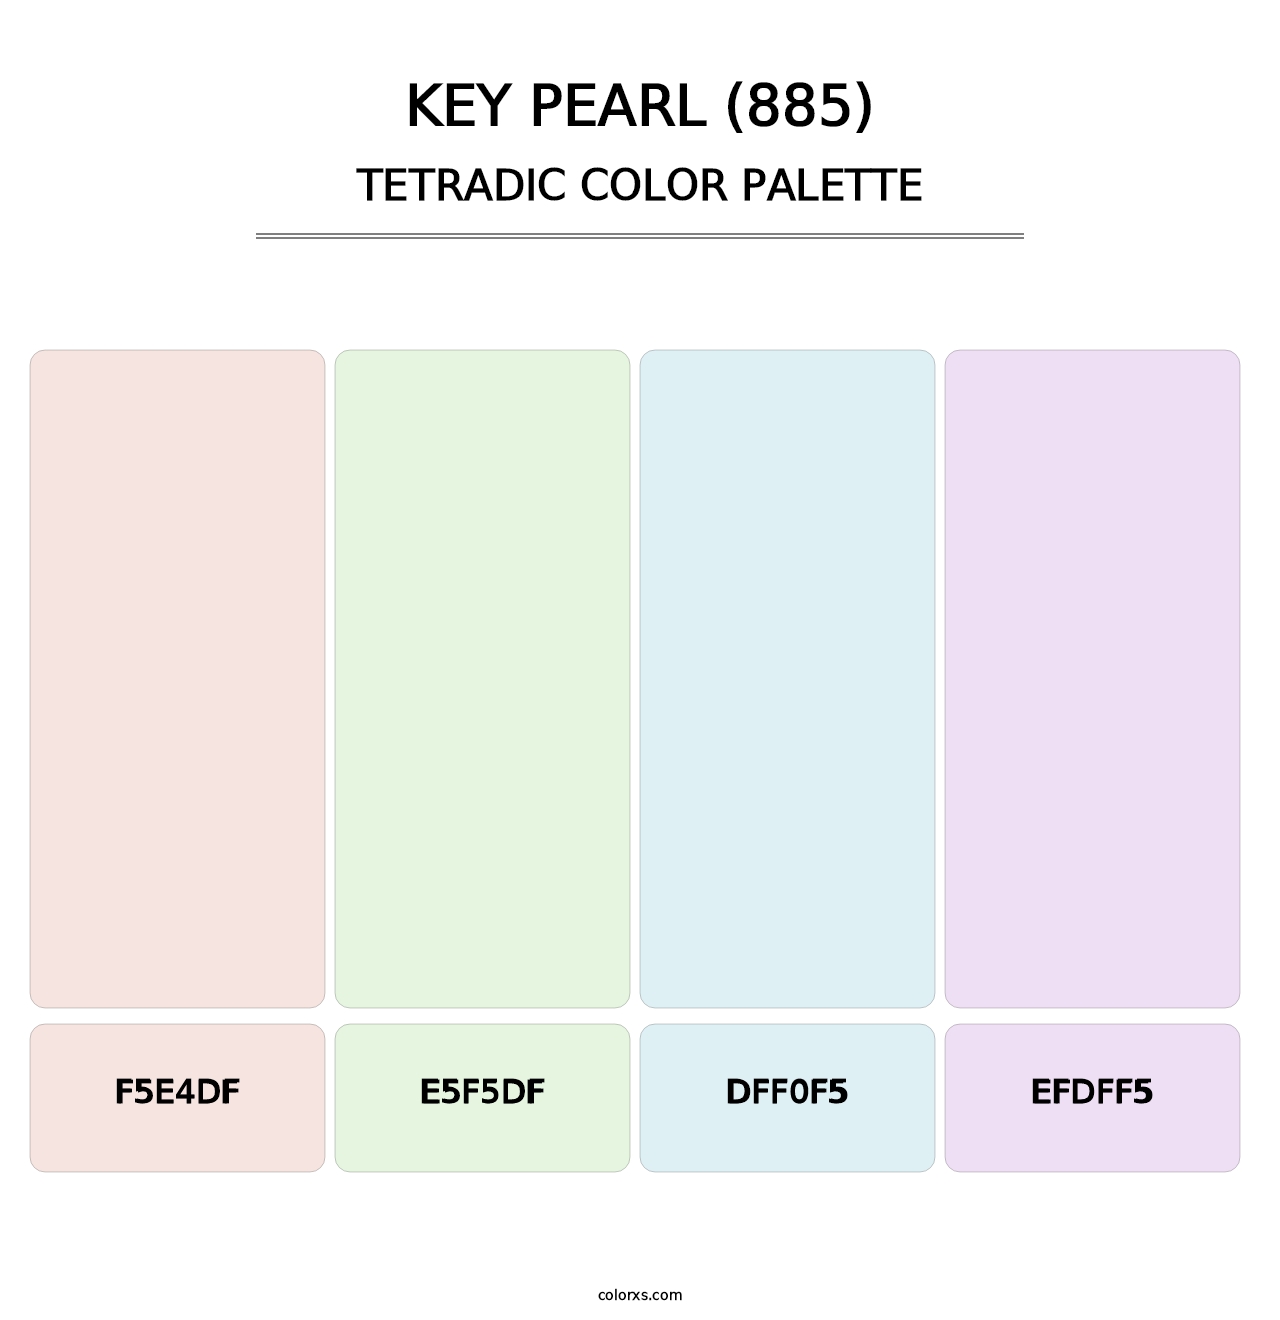 Key Pearl (885) - Tetradic Color Palette